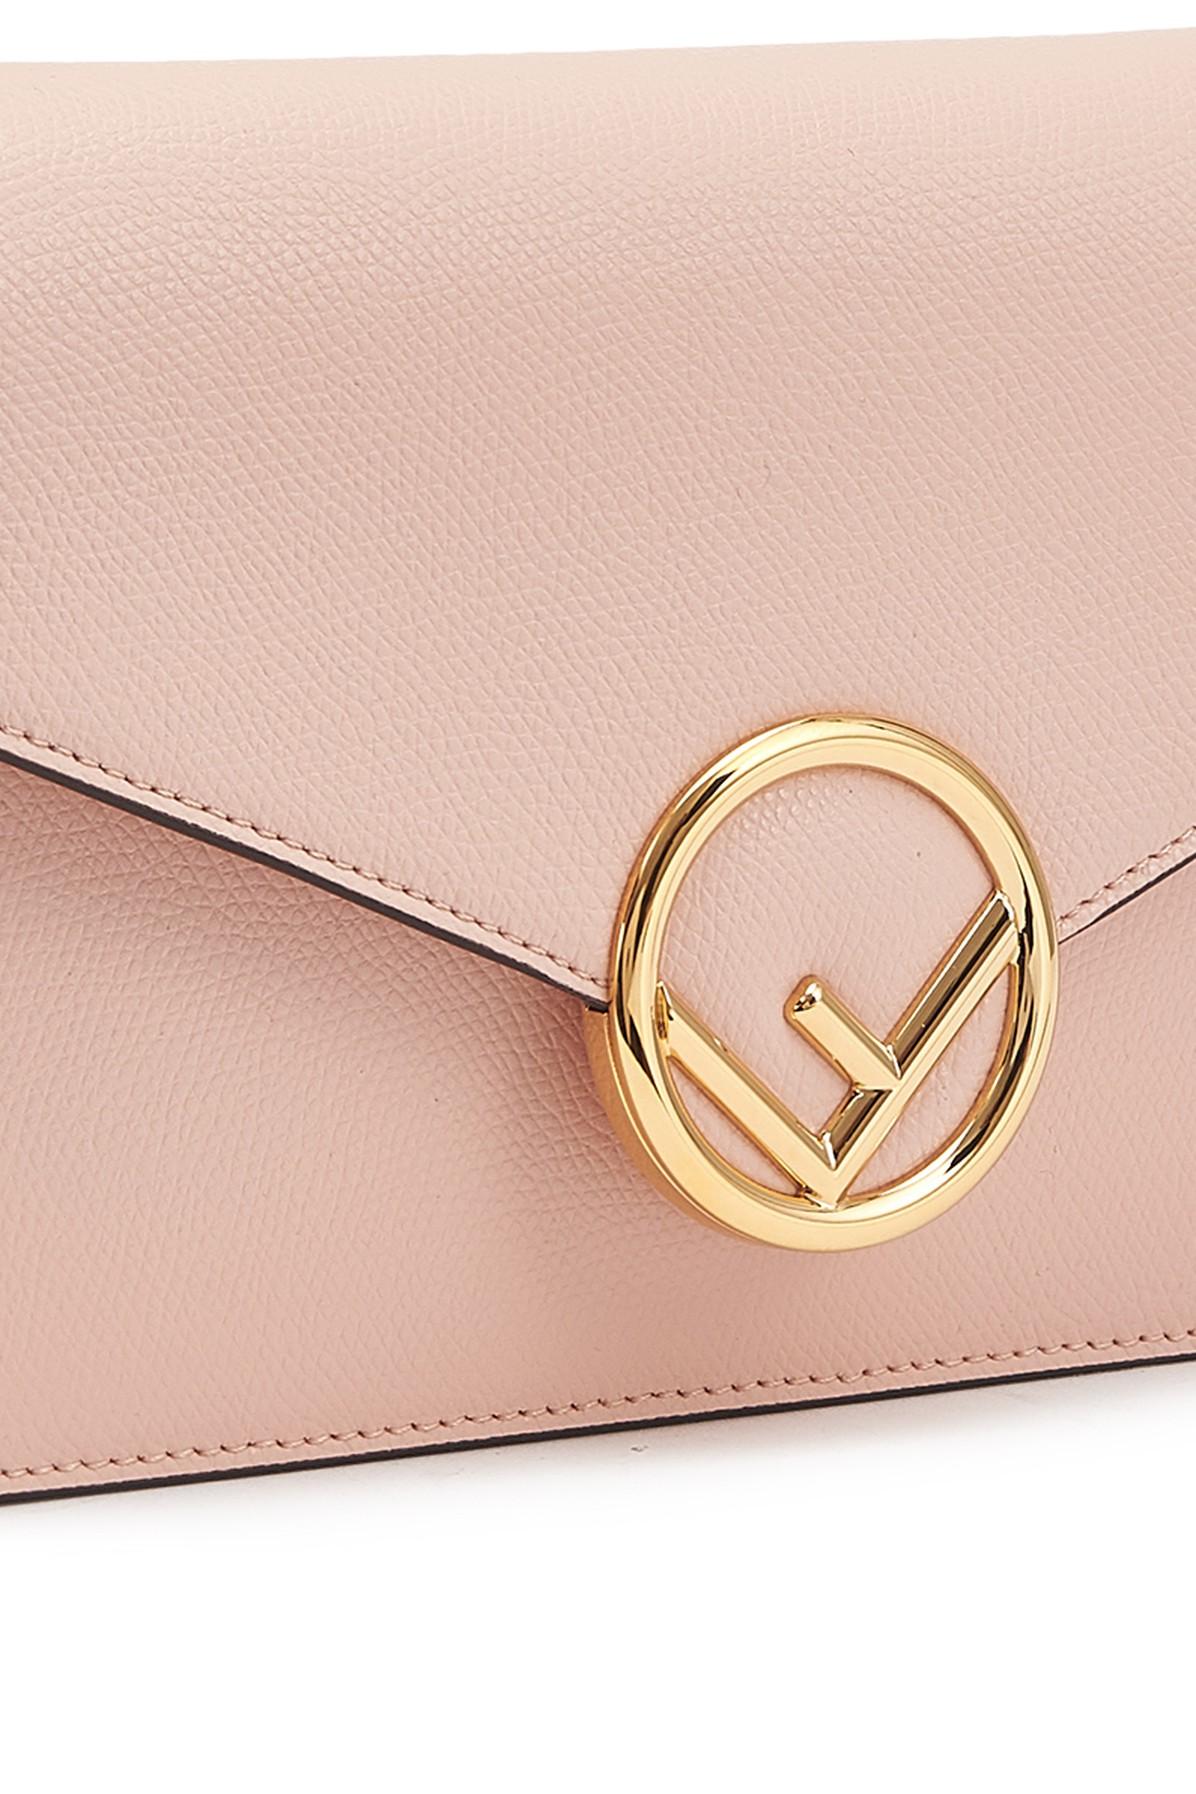 fendi wallet on chain pink